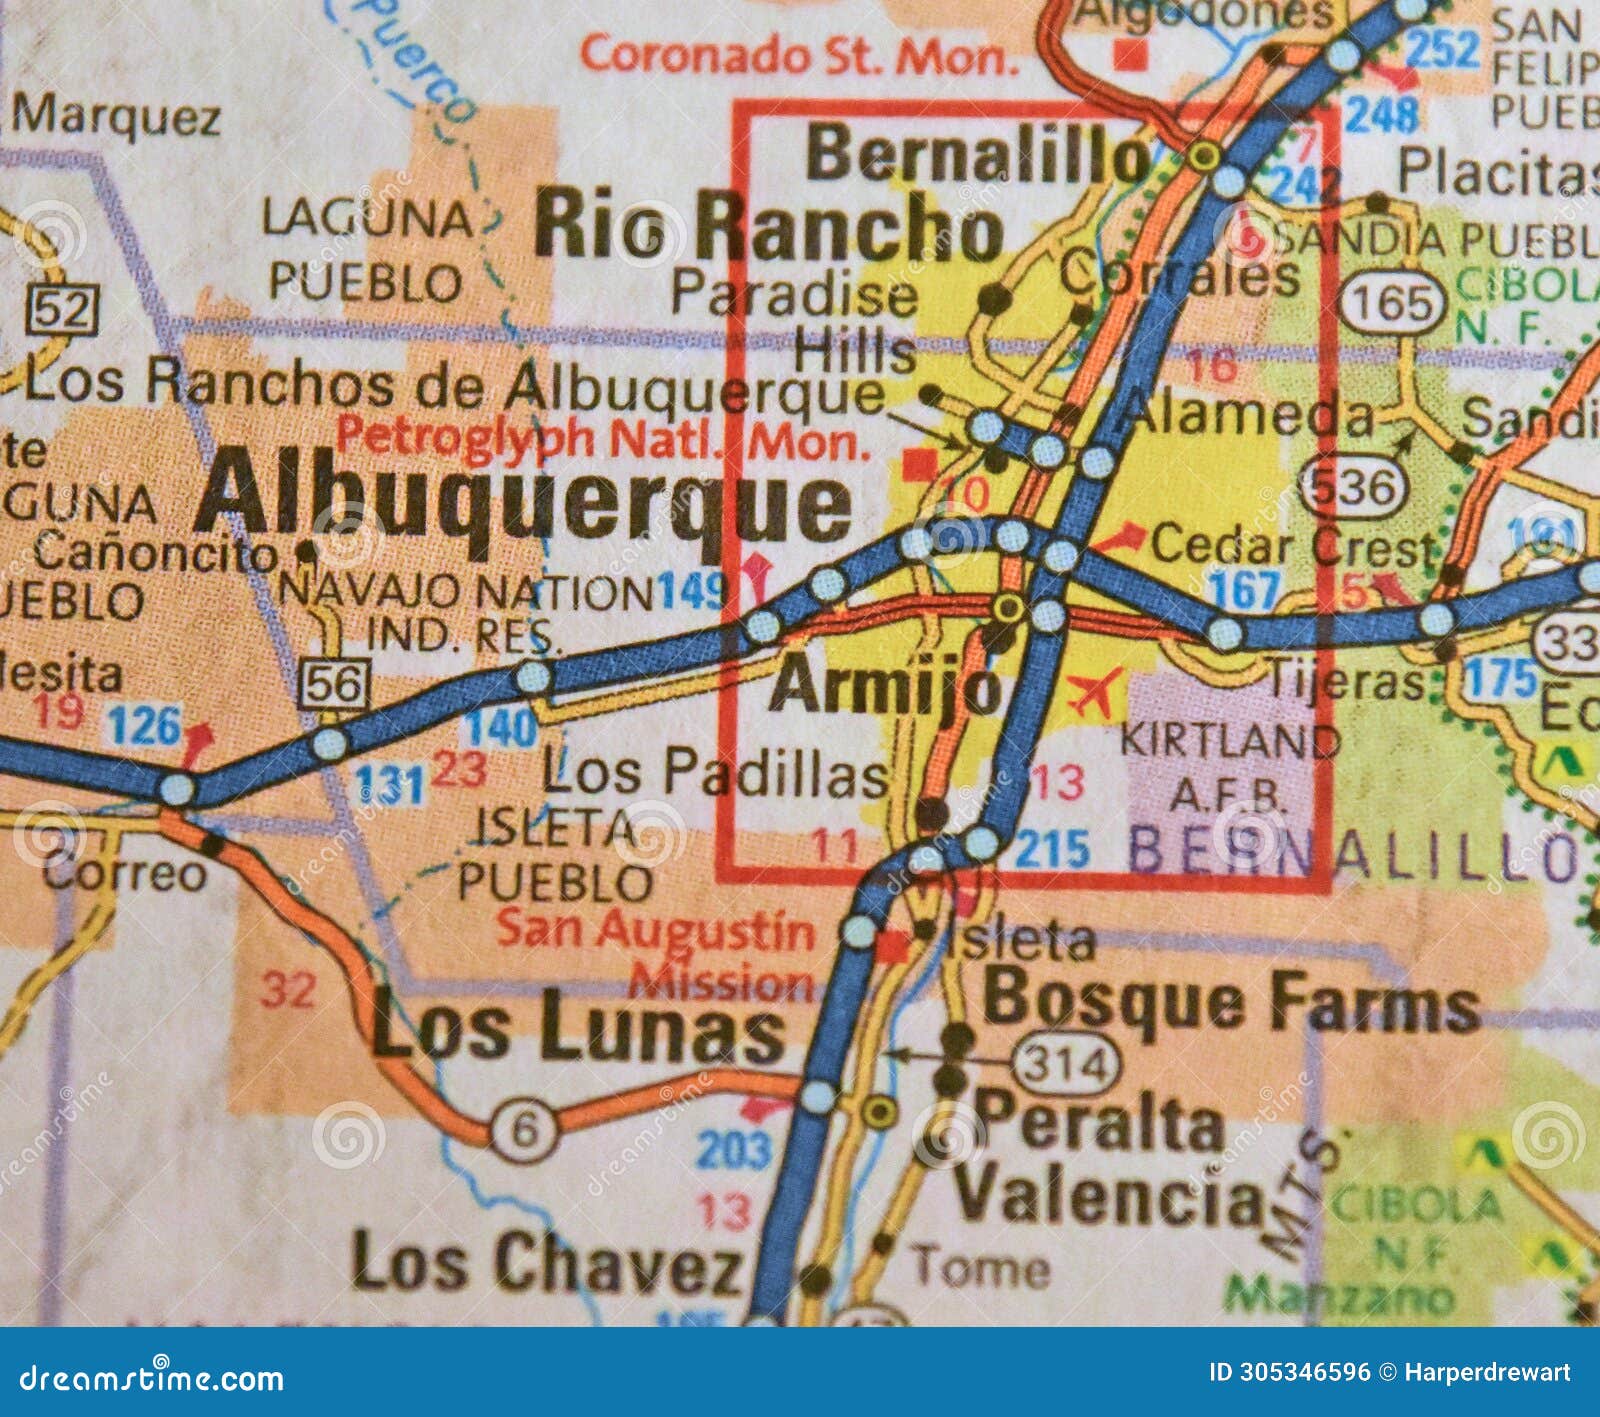 map image of albuquerque, new mexico